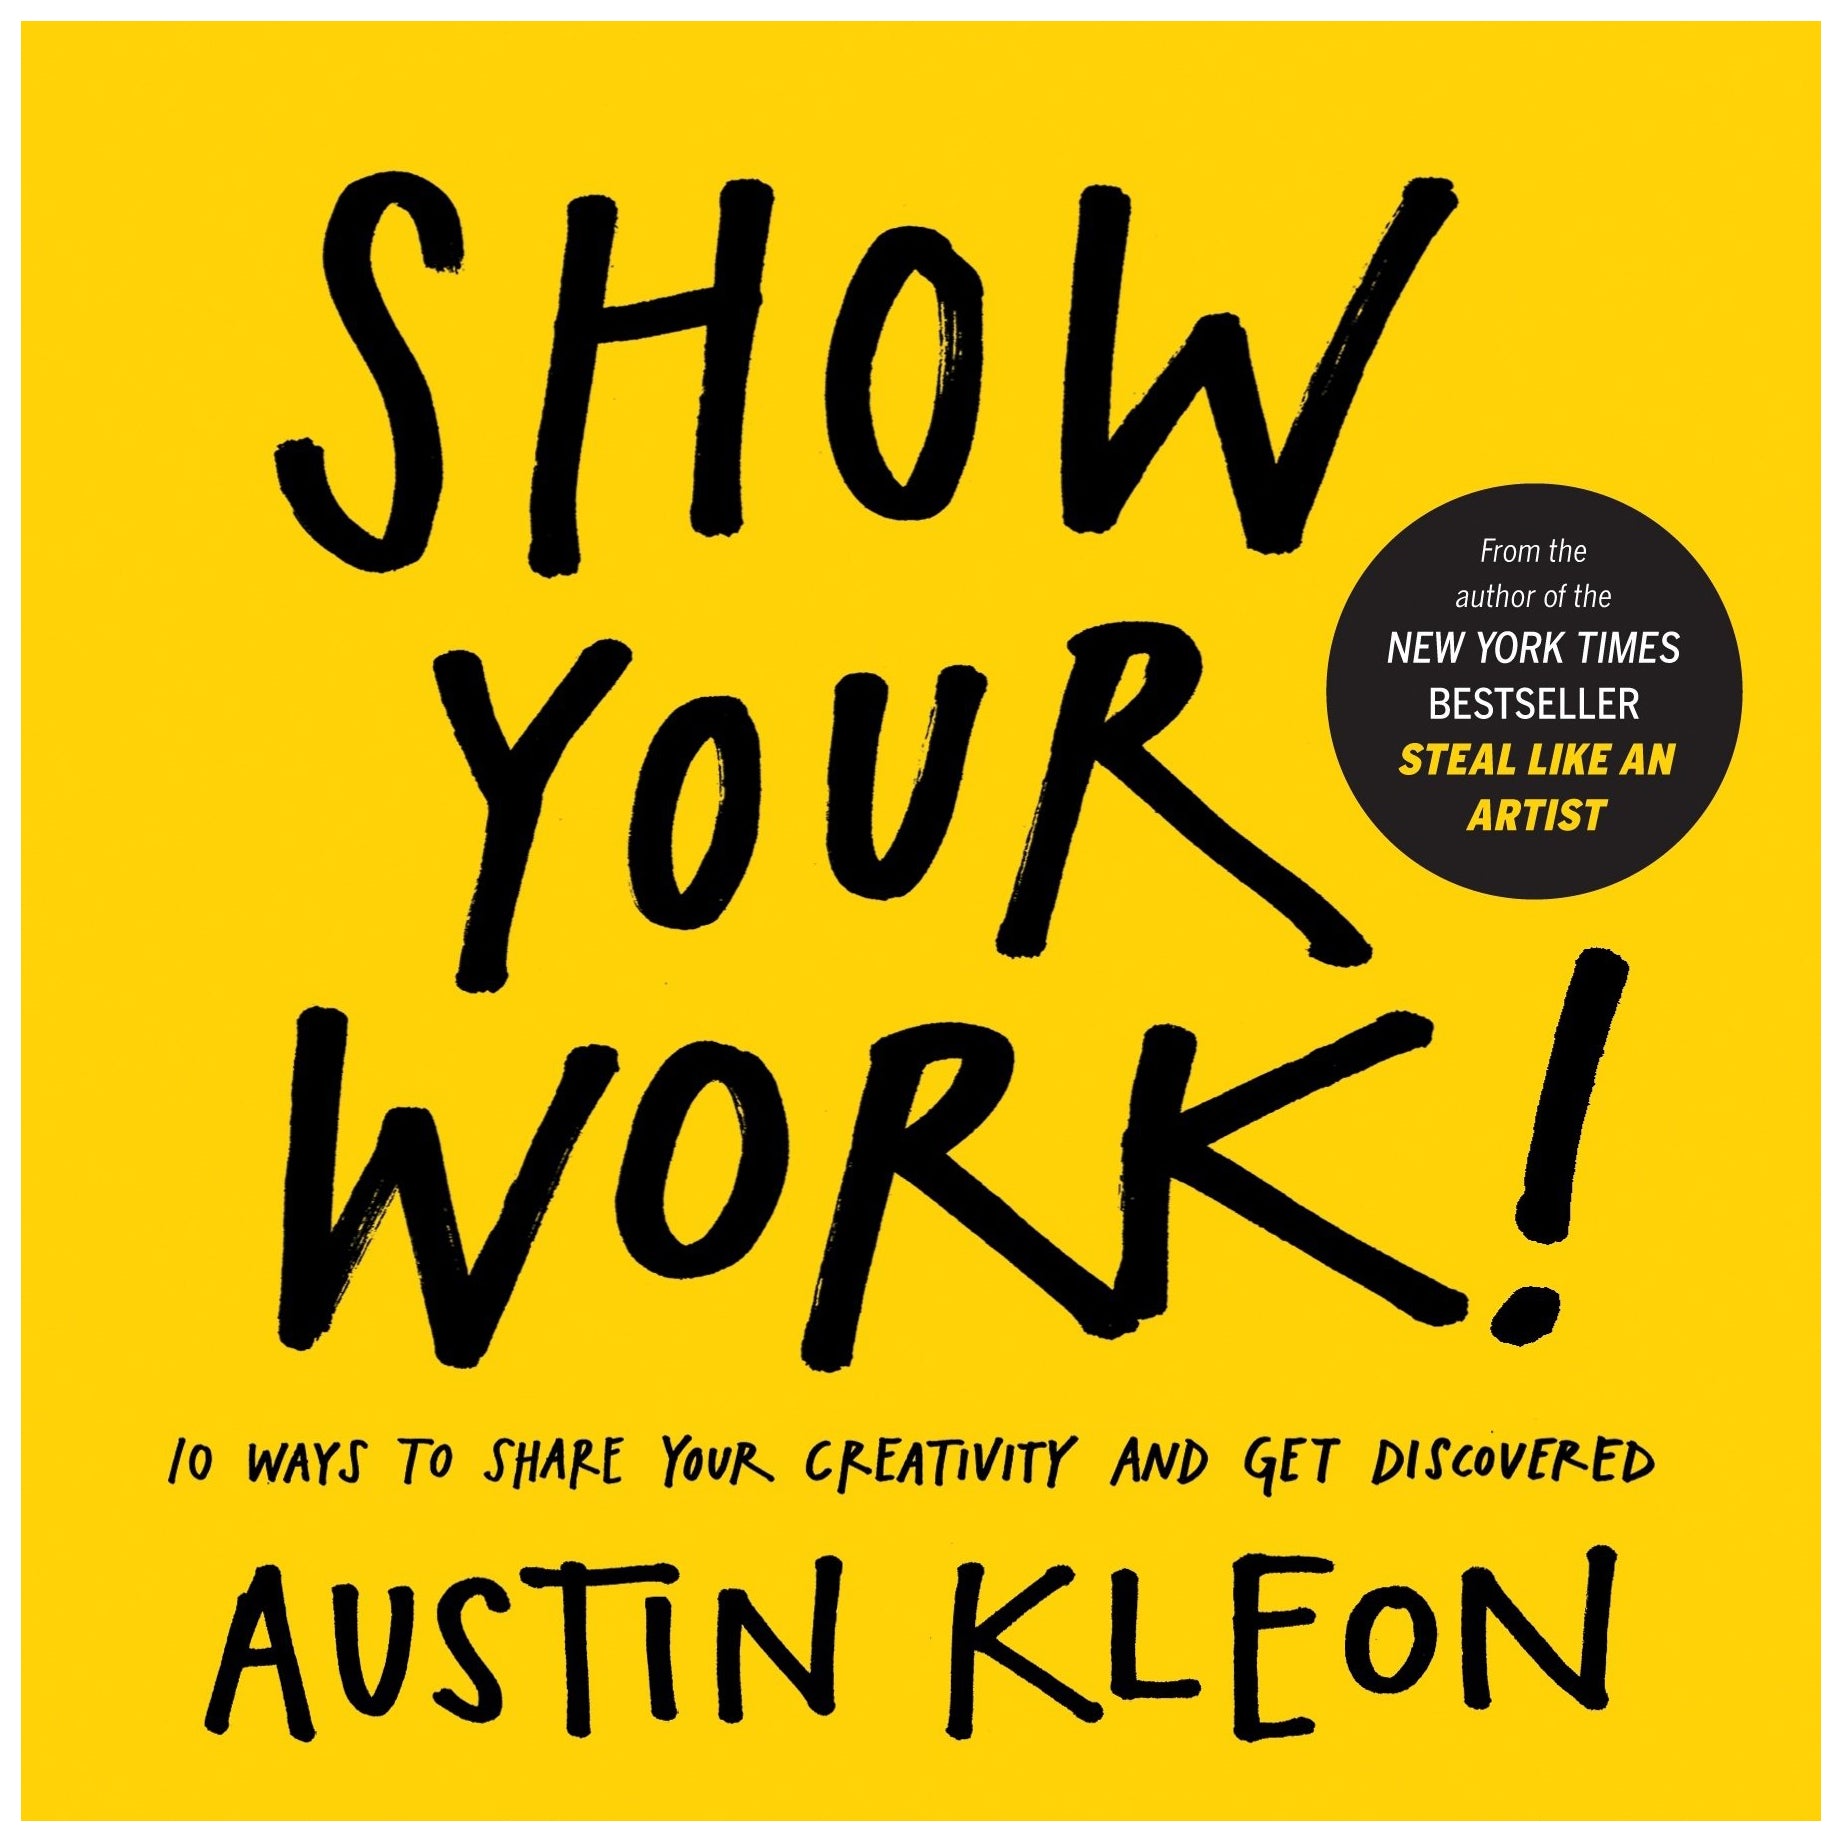 Austin Kleon Show Your Work